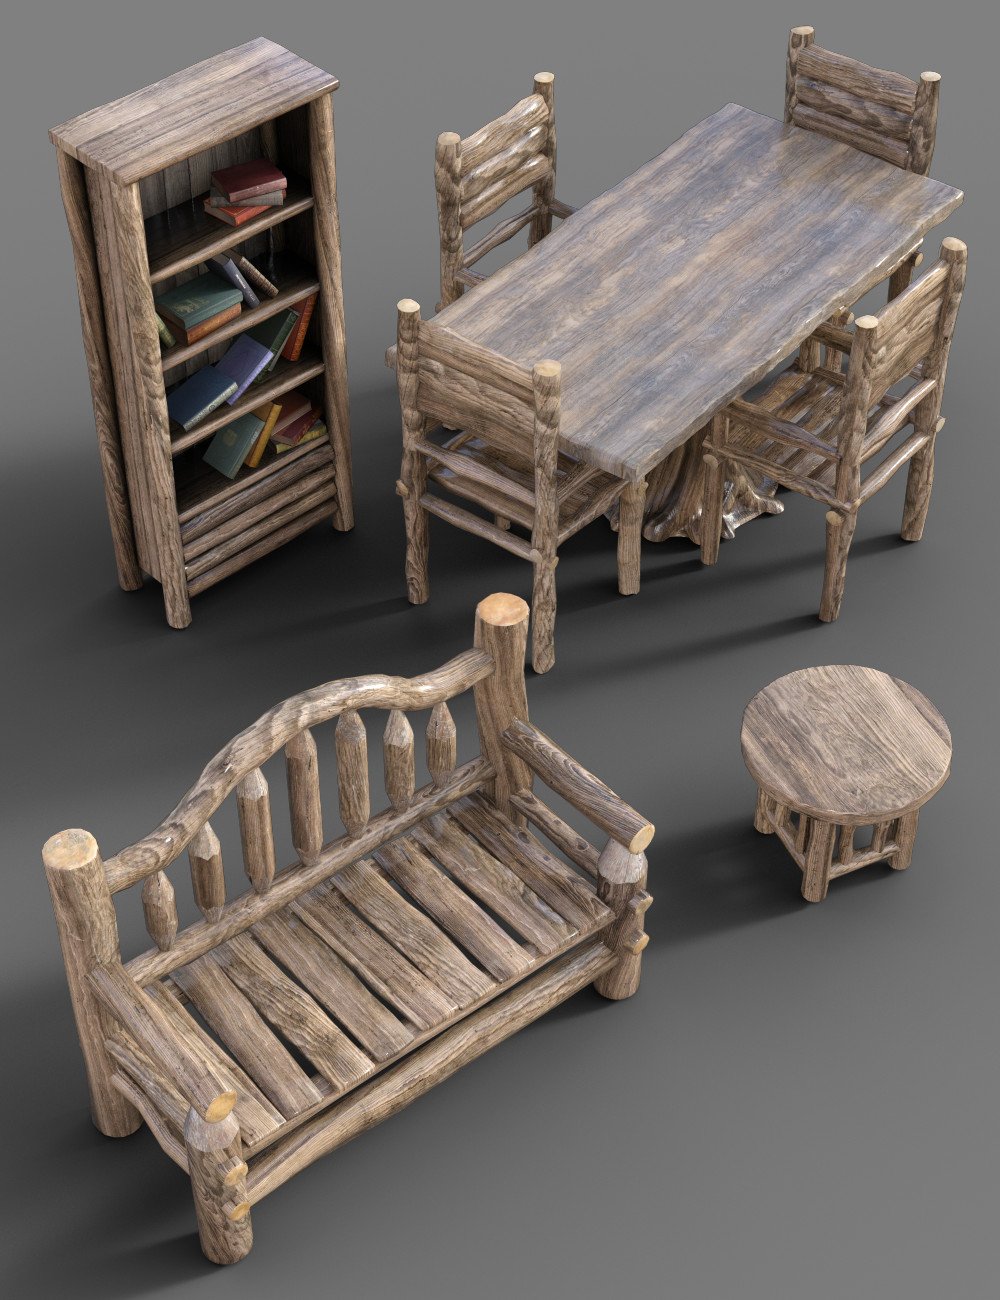 Rustic Furniture by: Merlin Studios, 3D Models by Daz 3D